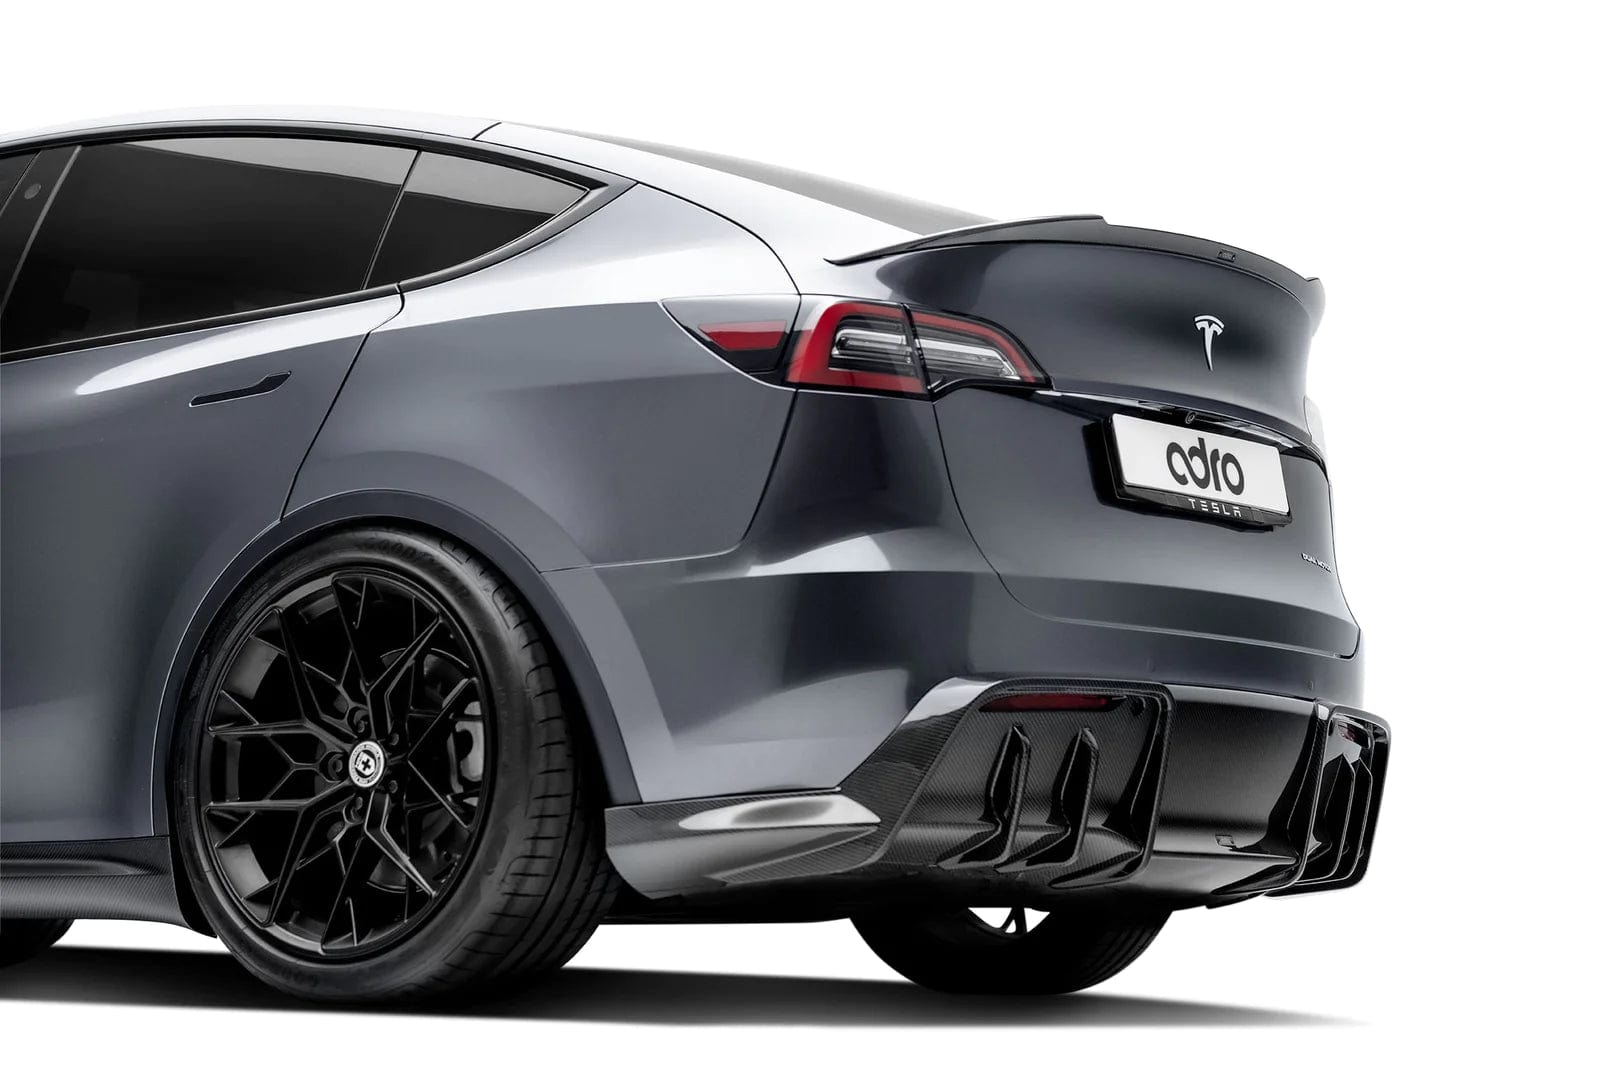 Kies-Motorsports Adro Adro Tesla Model Y Premium Prepreg Carbon Fiber Spoiler